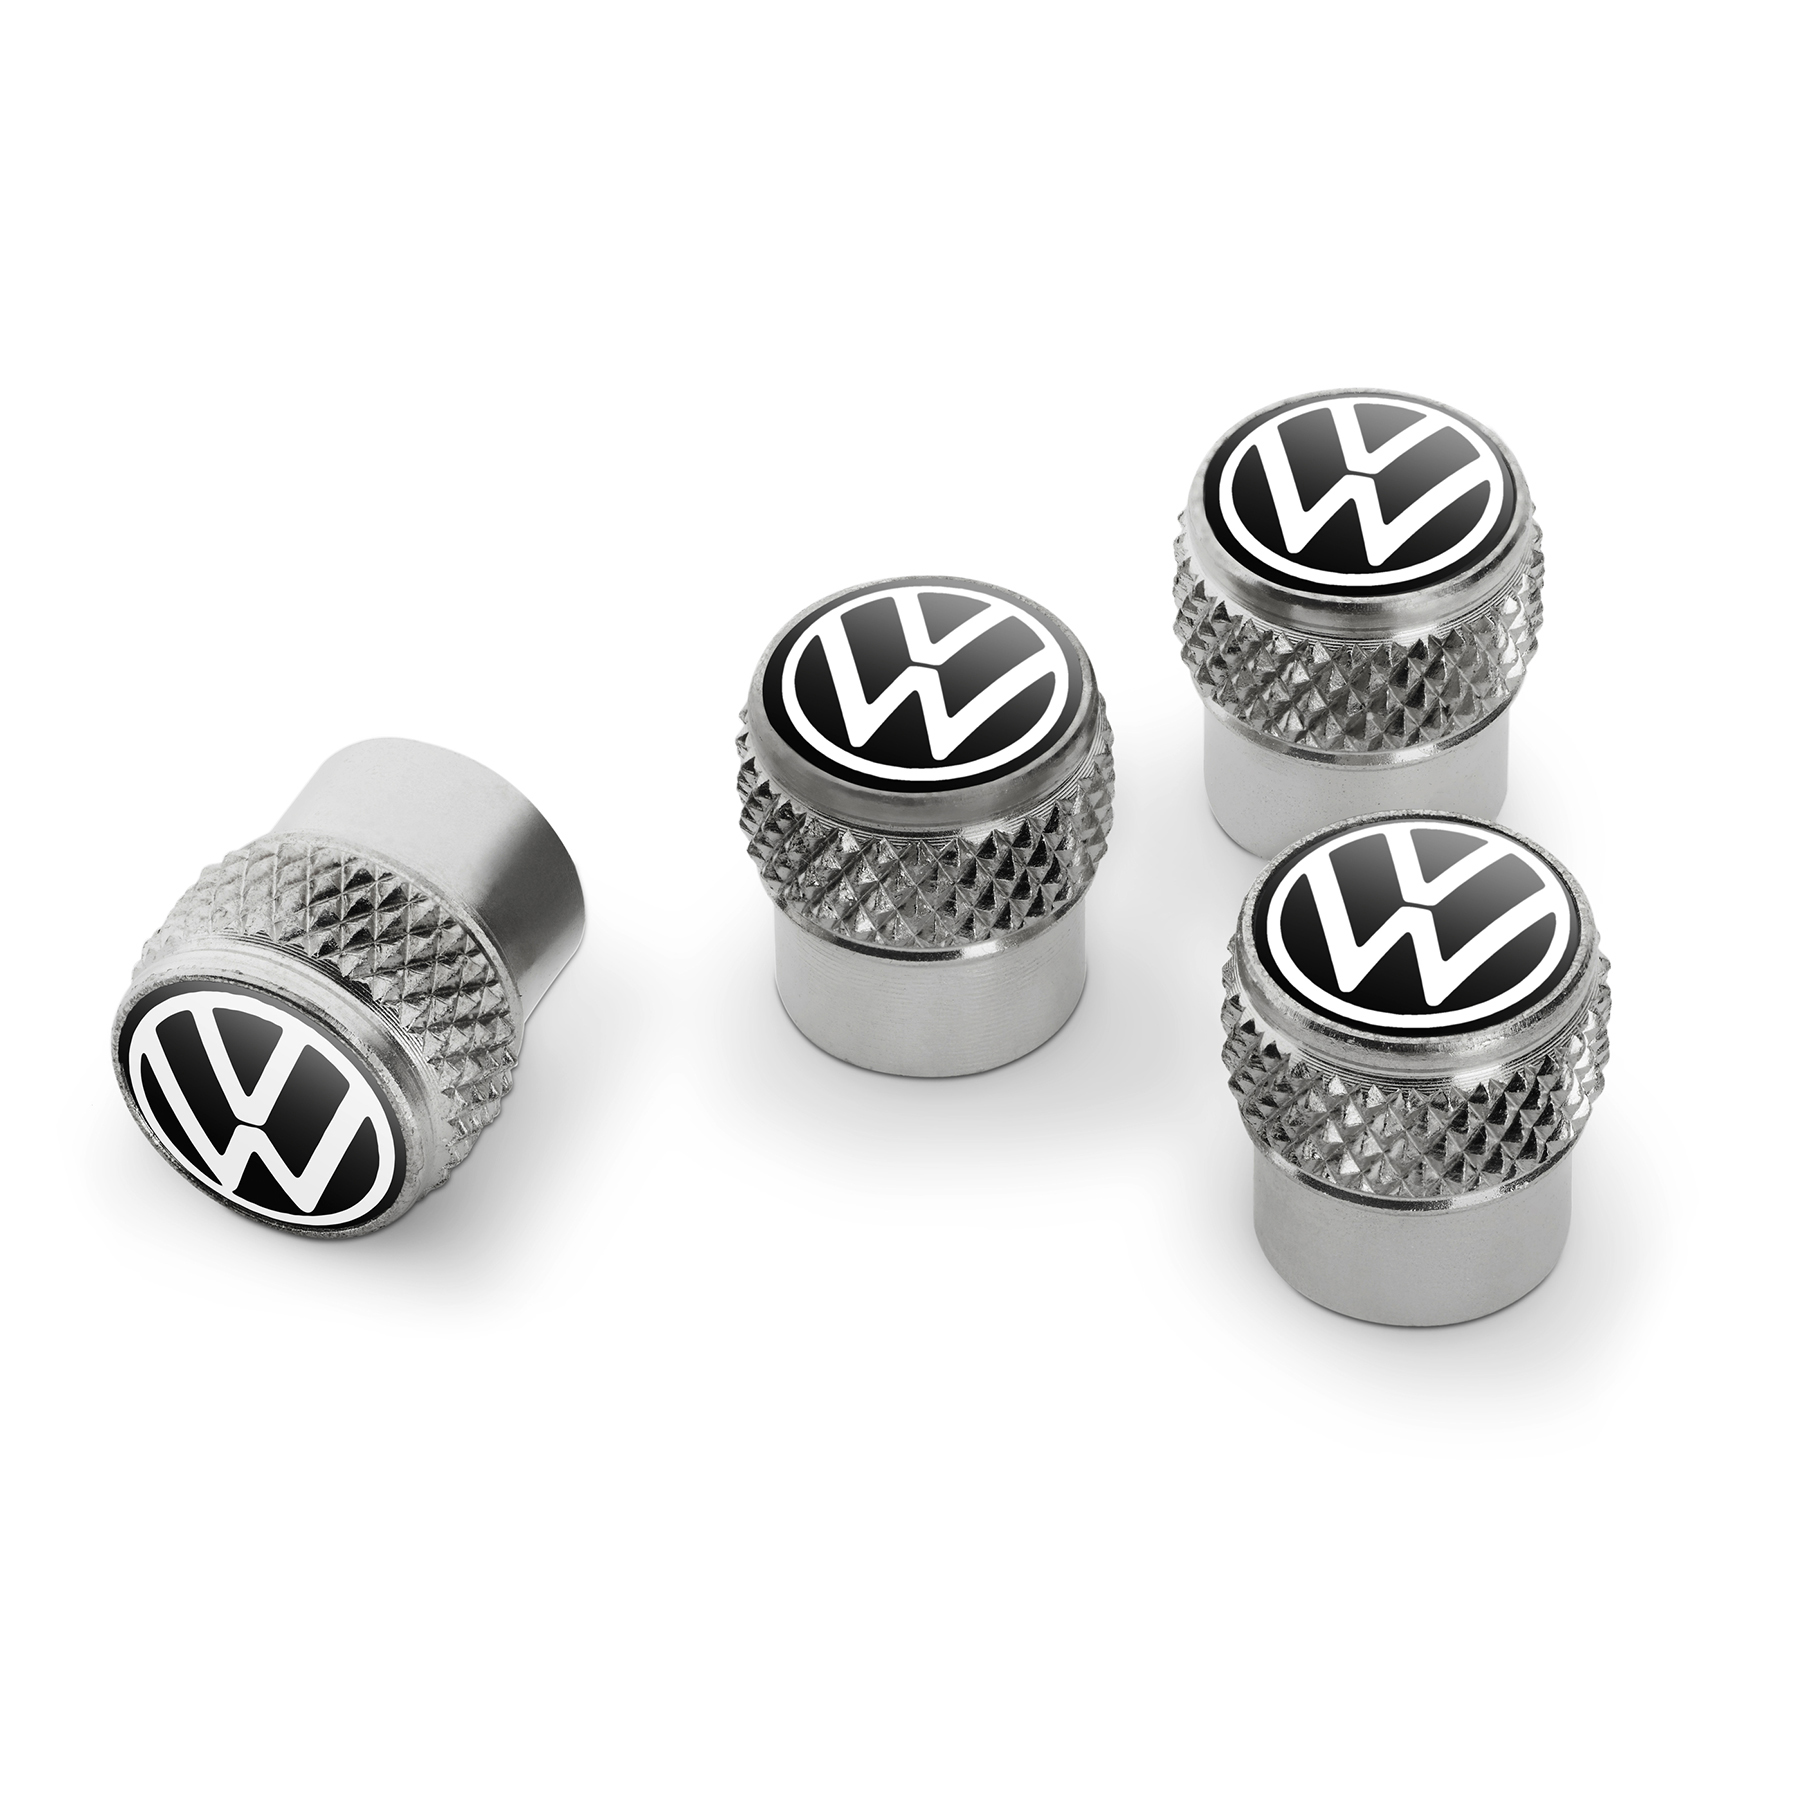 Volkswagen Ventilkappen mit Volkswagen Logo, für Gummi-/Metallventile